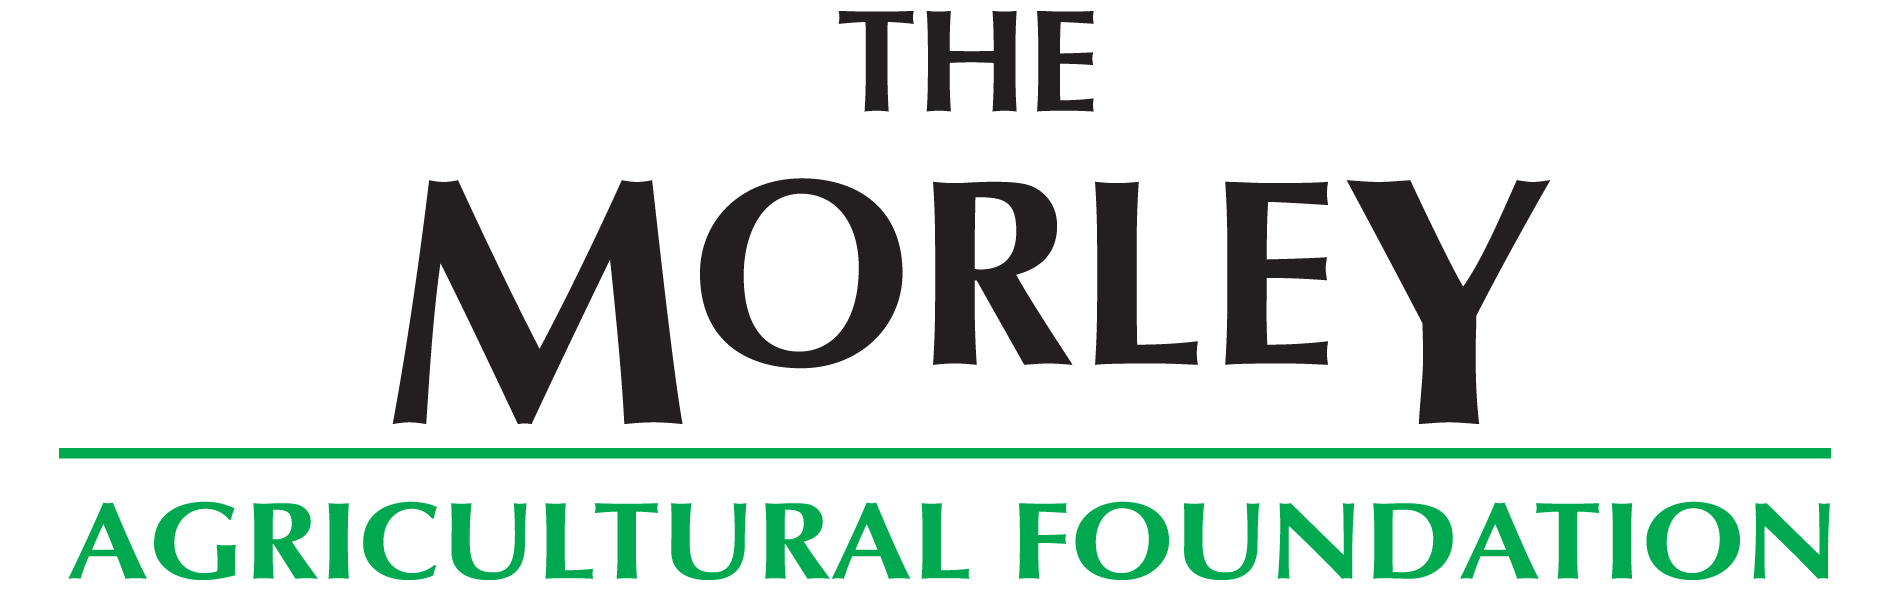 The Morley Agricultural Foundation logo